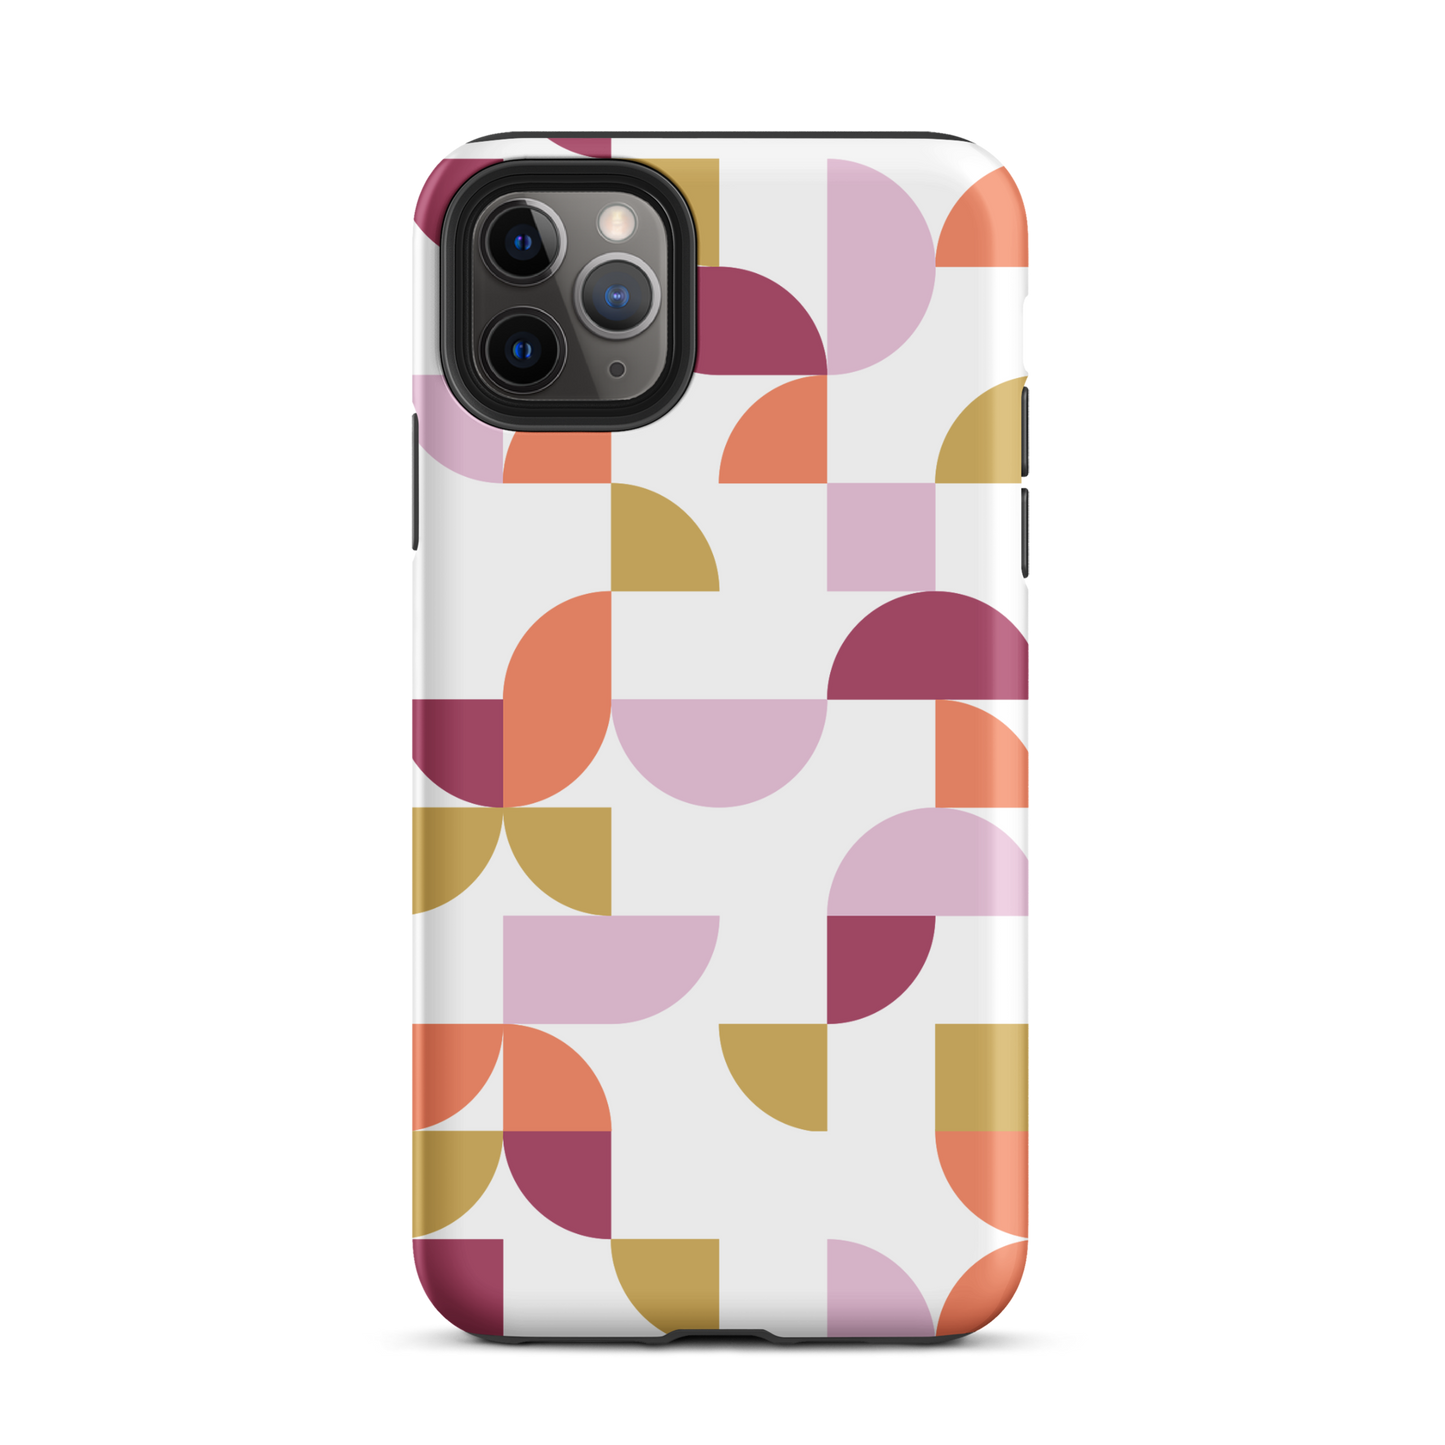 iPhone 11 Pro max tough case in Geometria I Sunset design